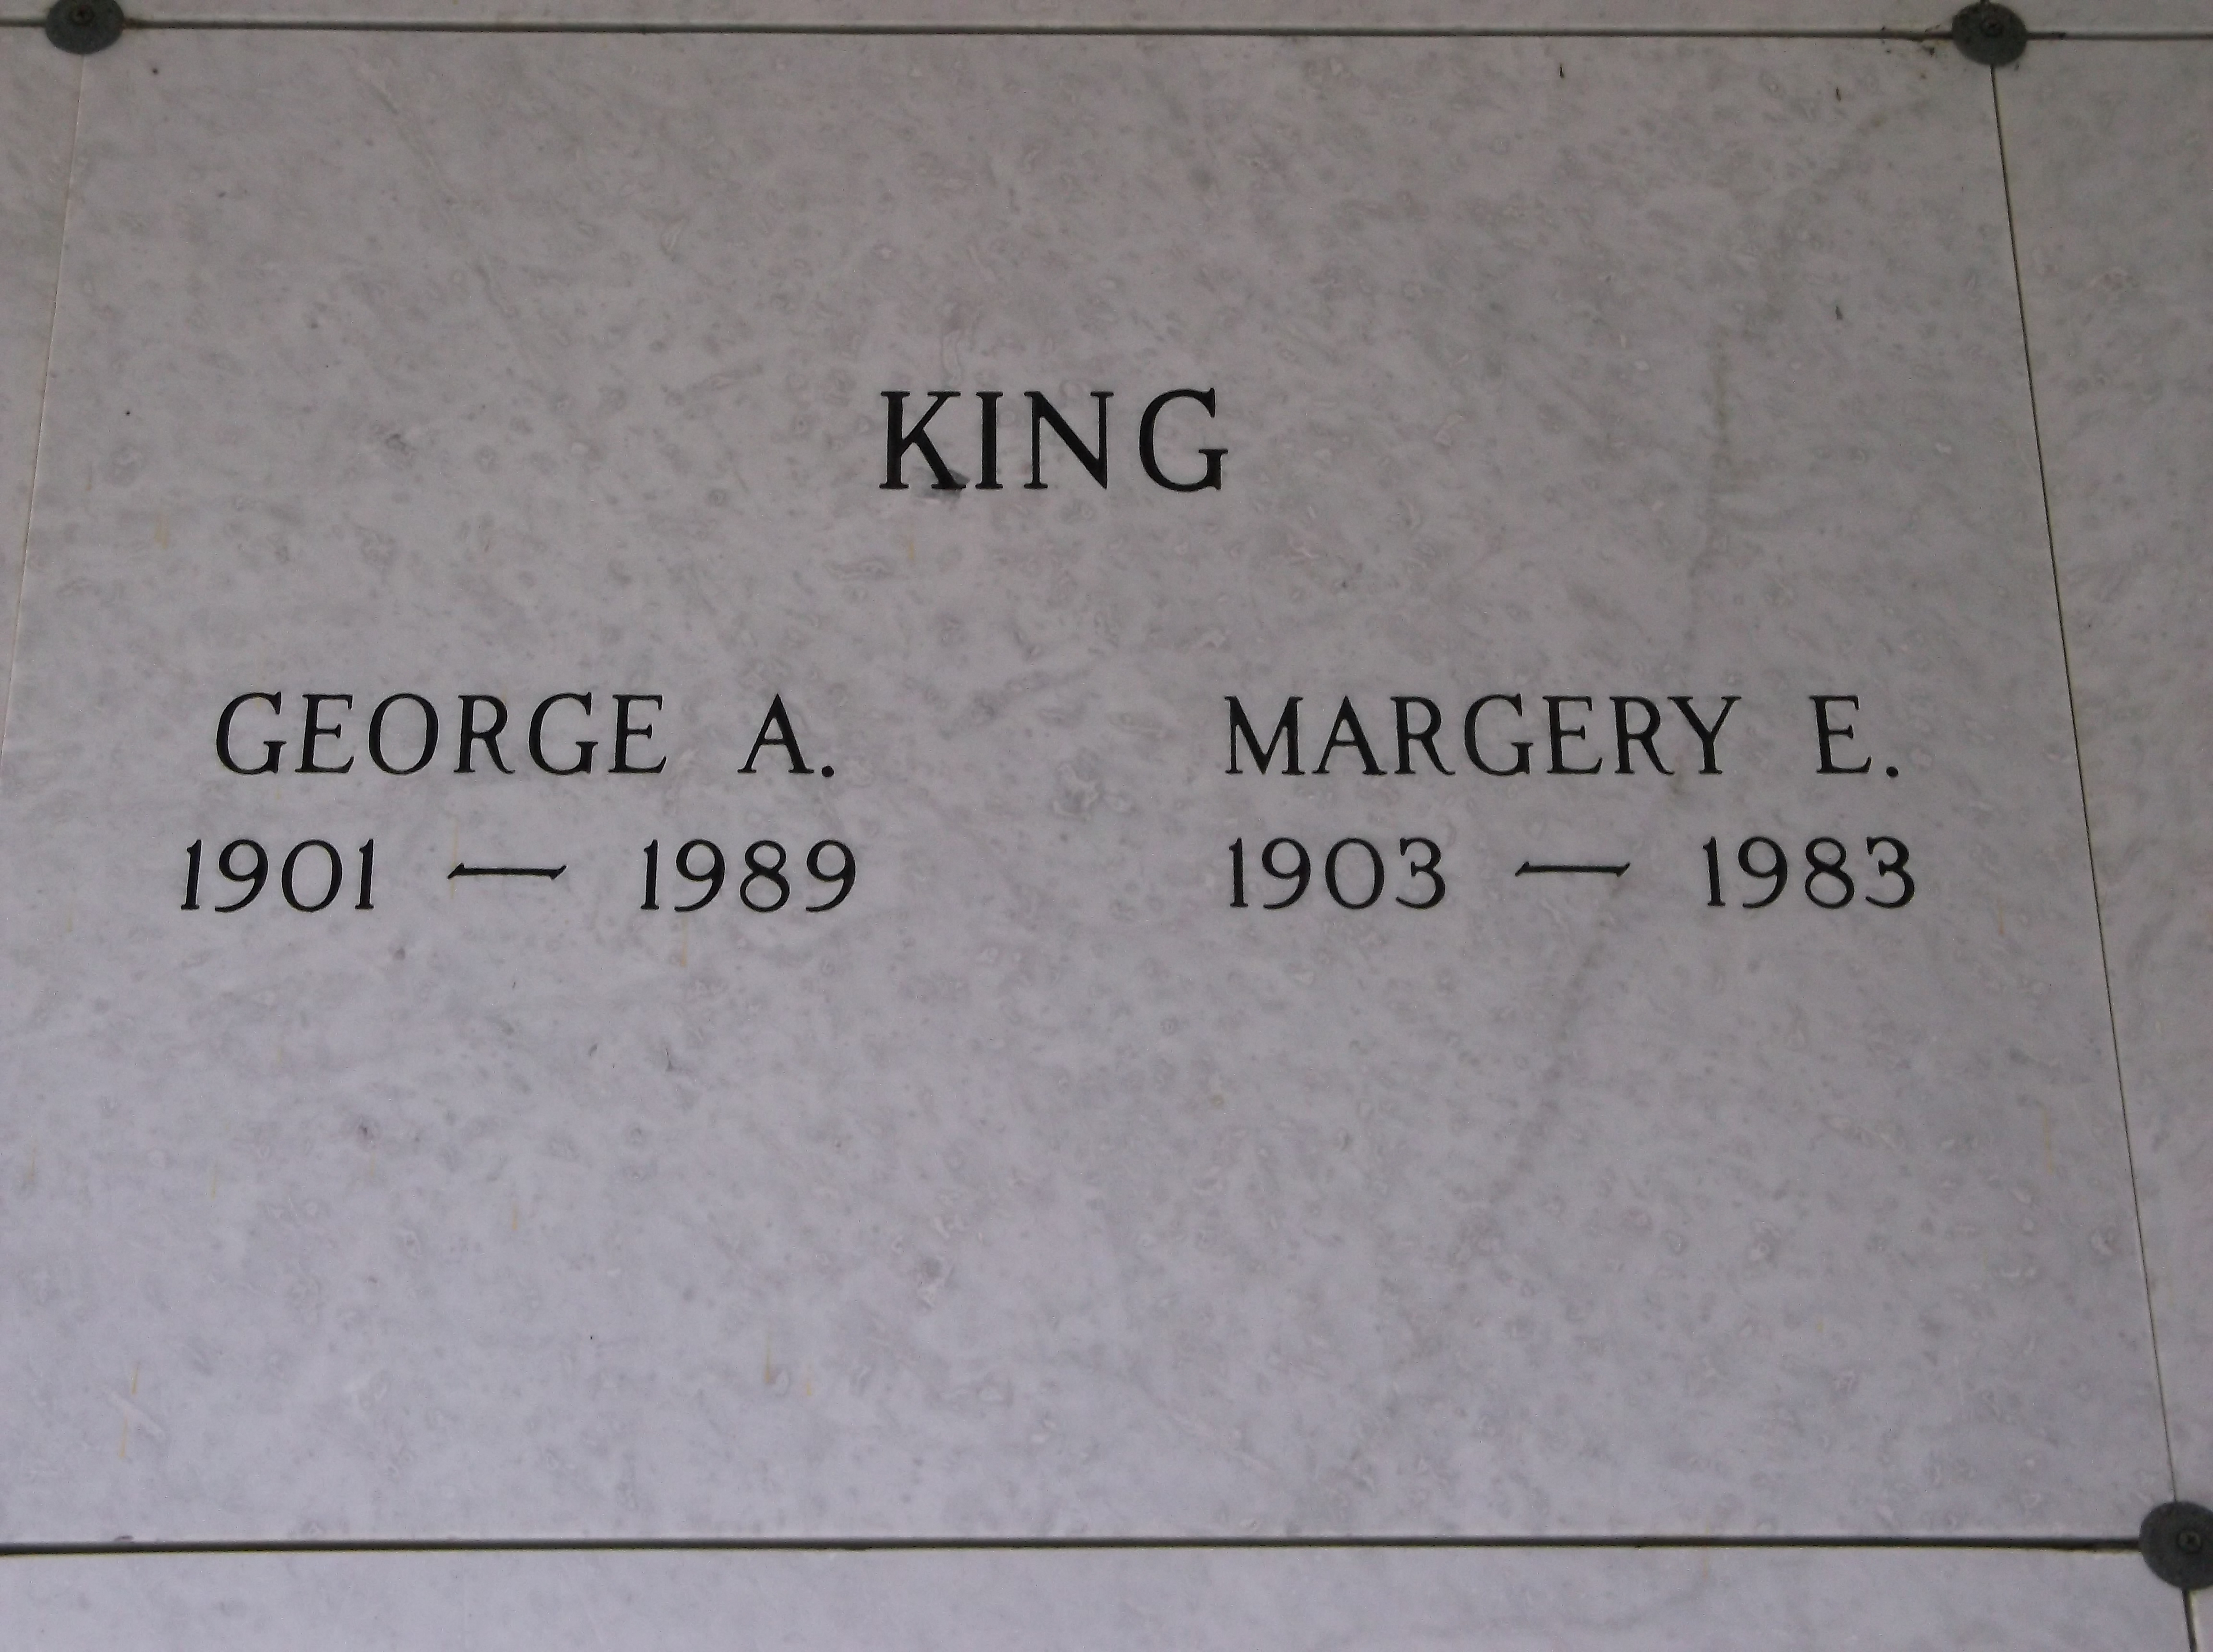 George A King